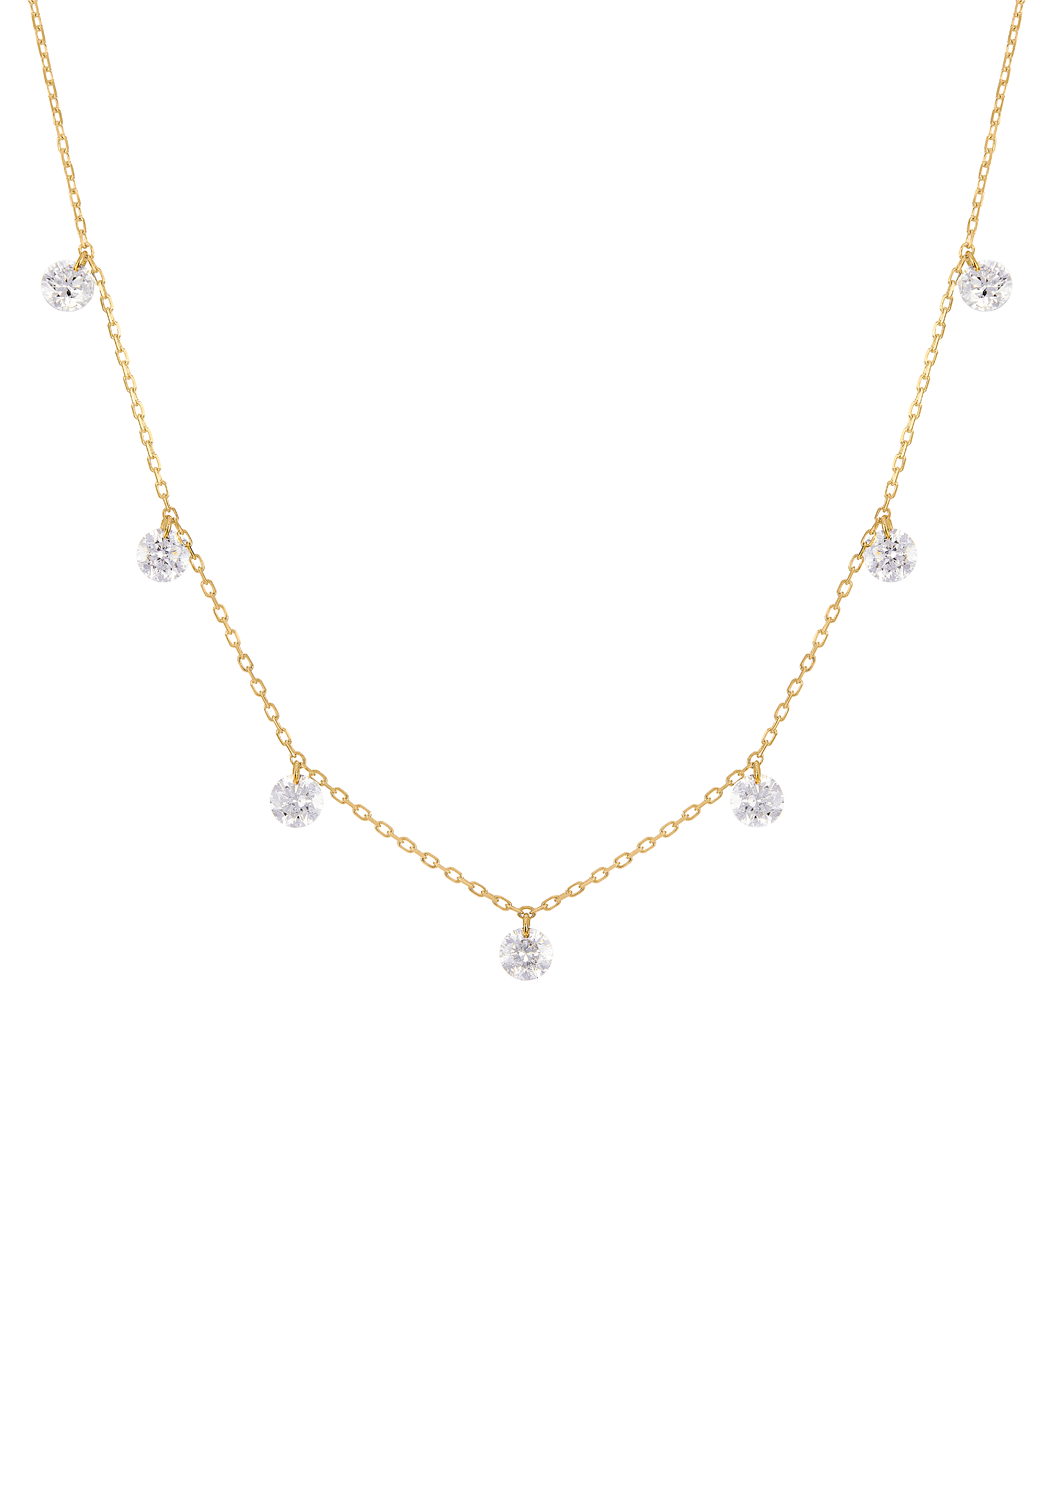 Persée Paris 18K Yellow Gold Danaé 7 Diamond Necklace | OsterJewelers.com